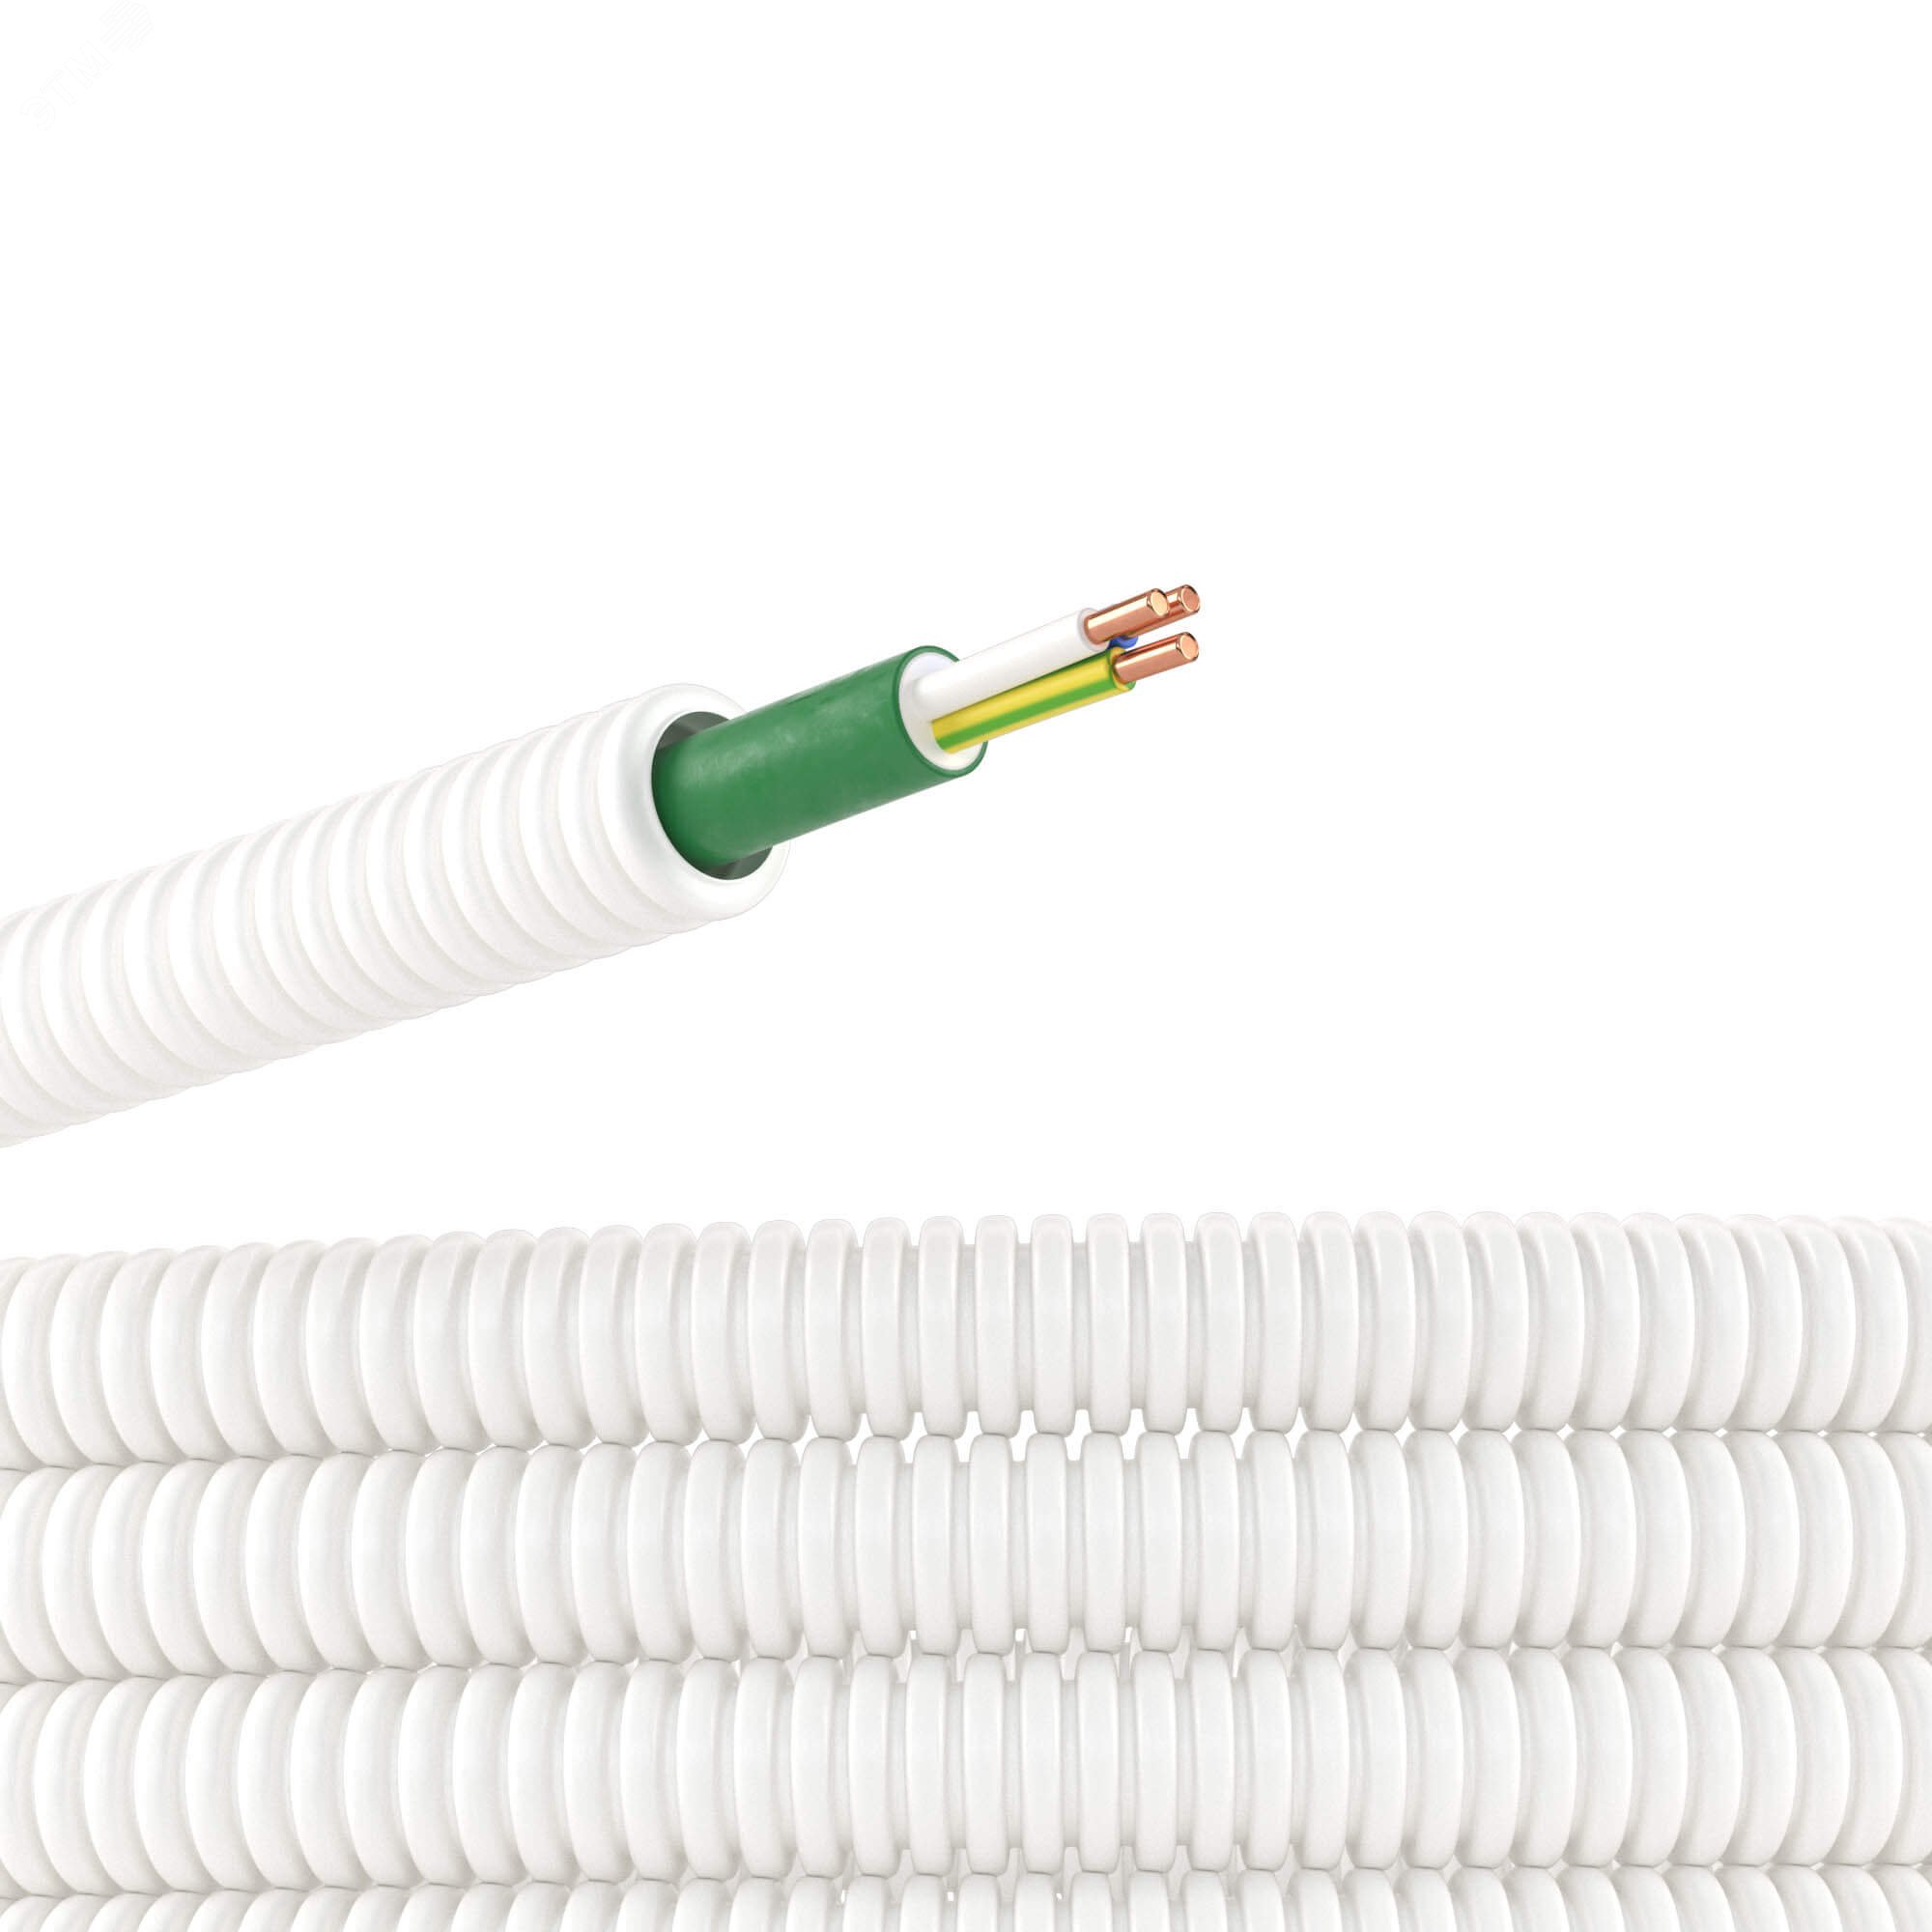 Электротруба ПЛЛ гибкая гофр. не содержит галогенов д.25мм цвет белый с кабелем ППГнг(А)-FRHF 3x2,5мм РЭК ГОСТ+, 50м 8S82550FRHF DKC - превью 2